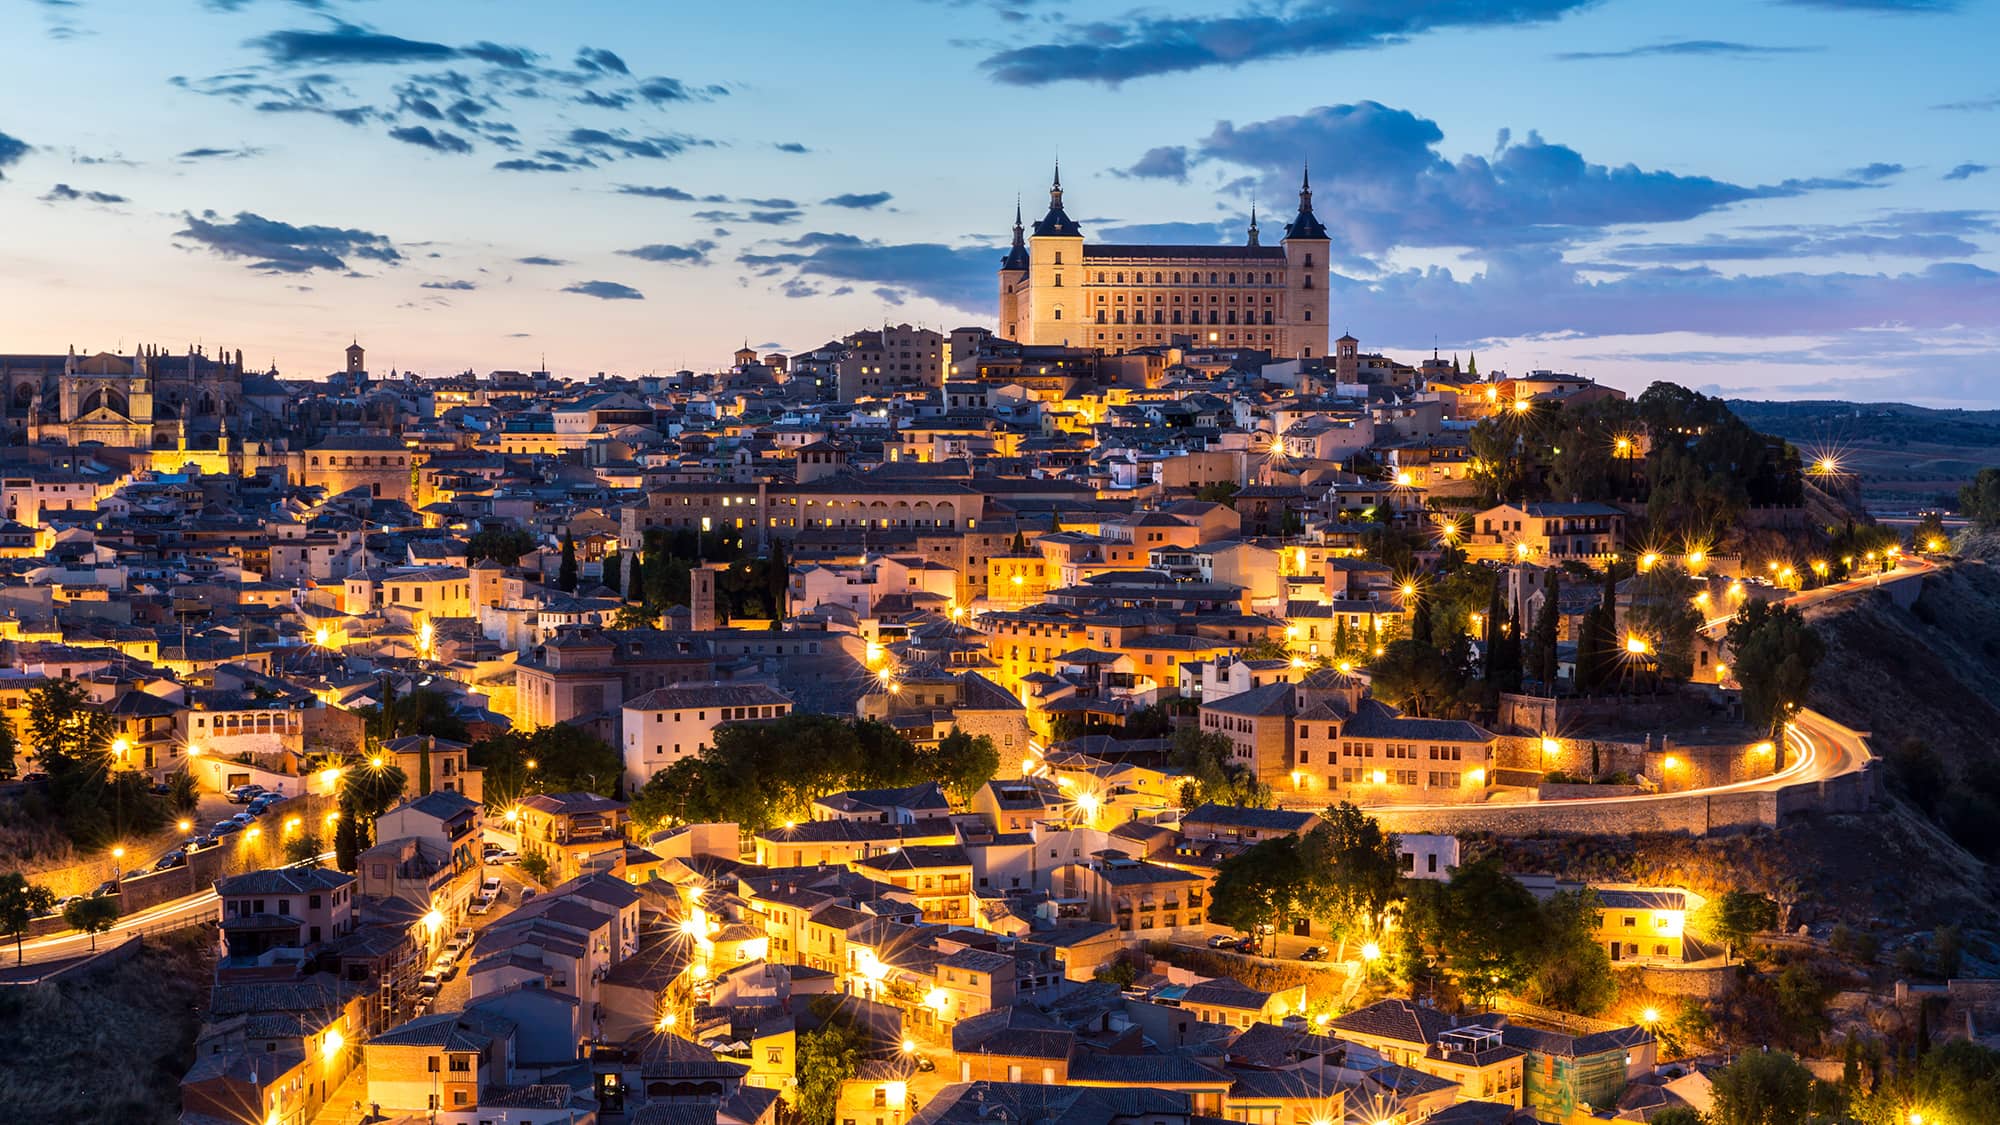 Toledo, Spain at night